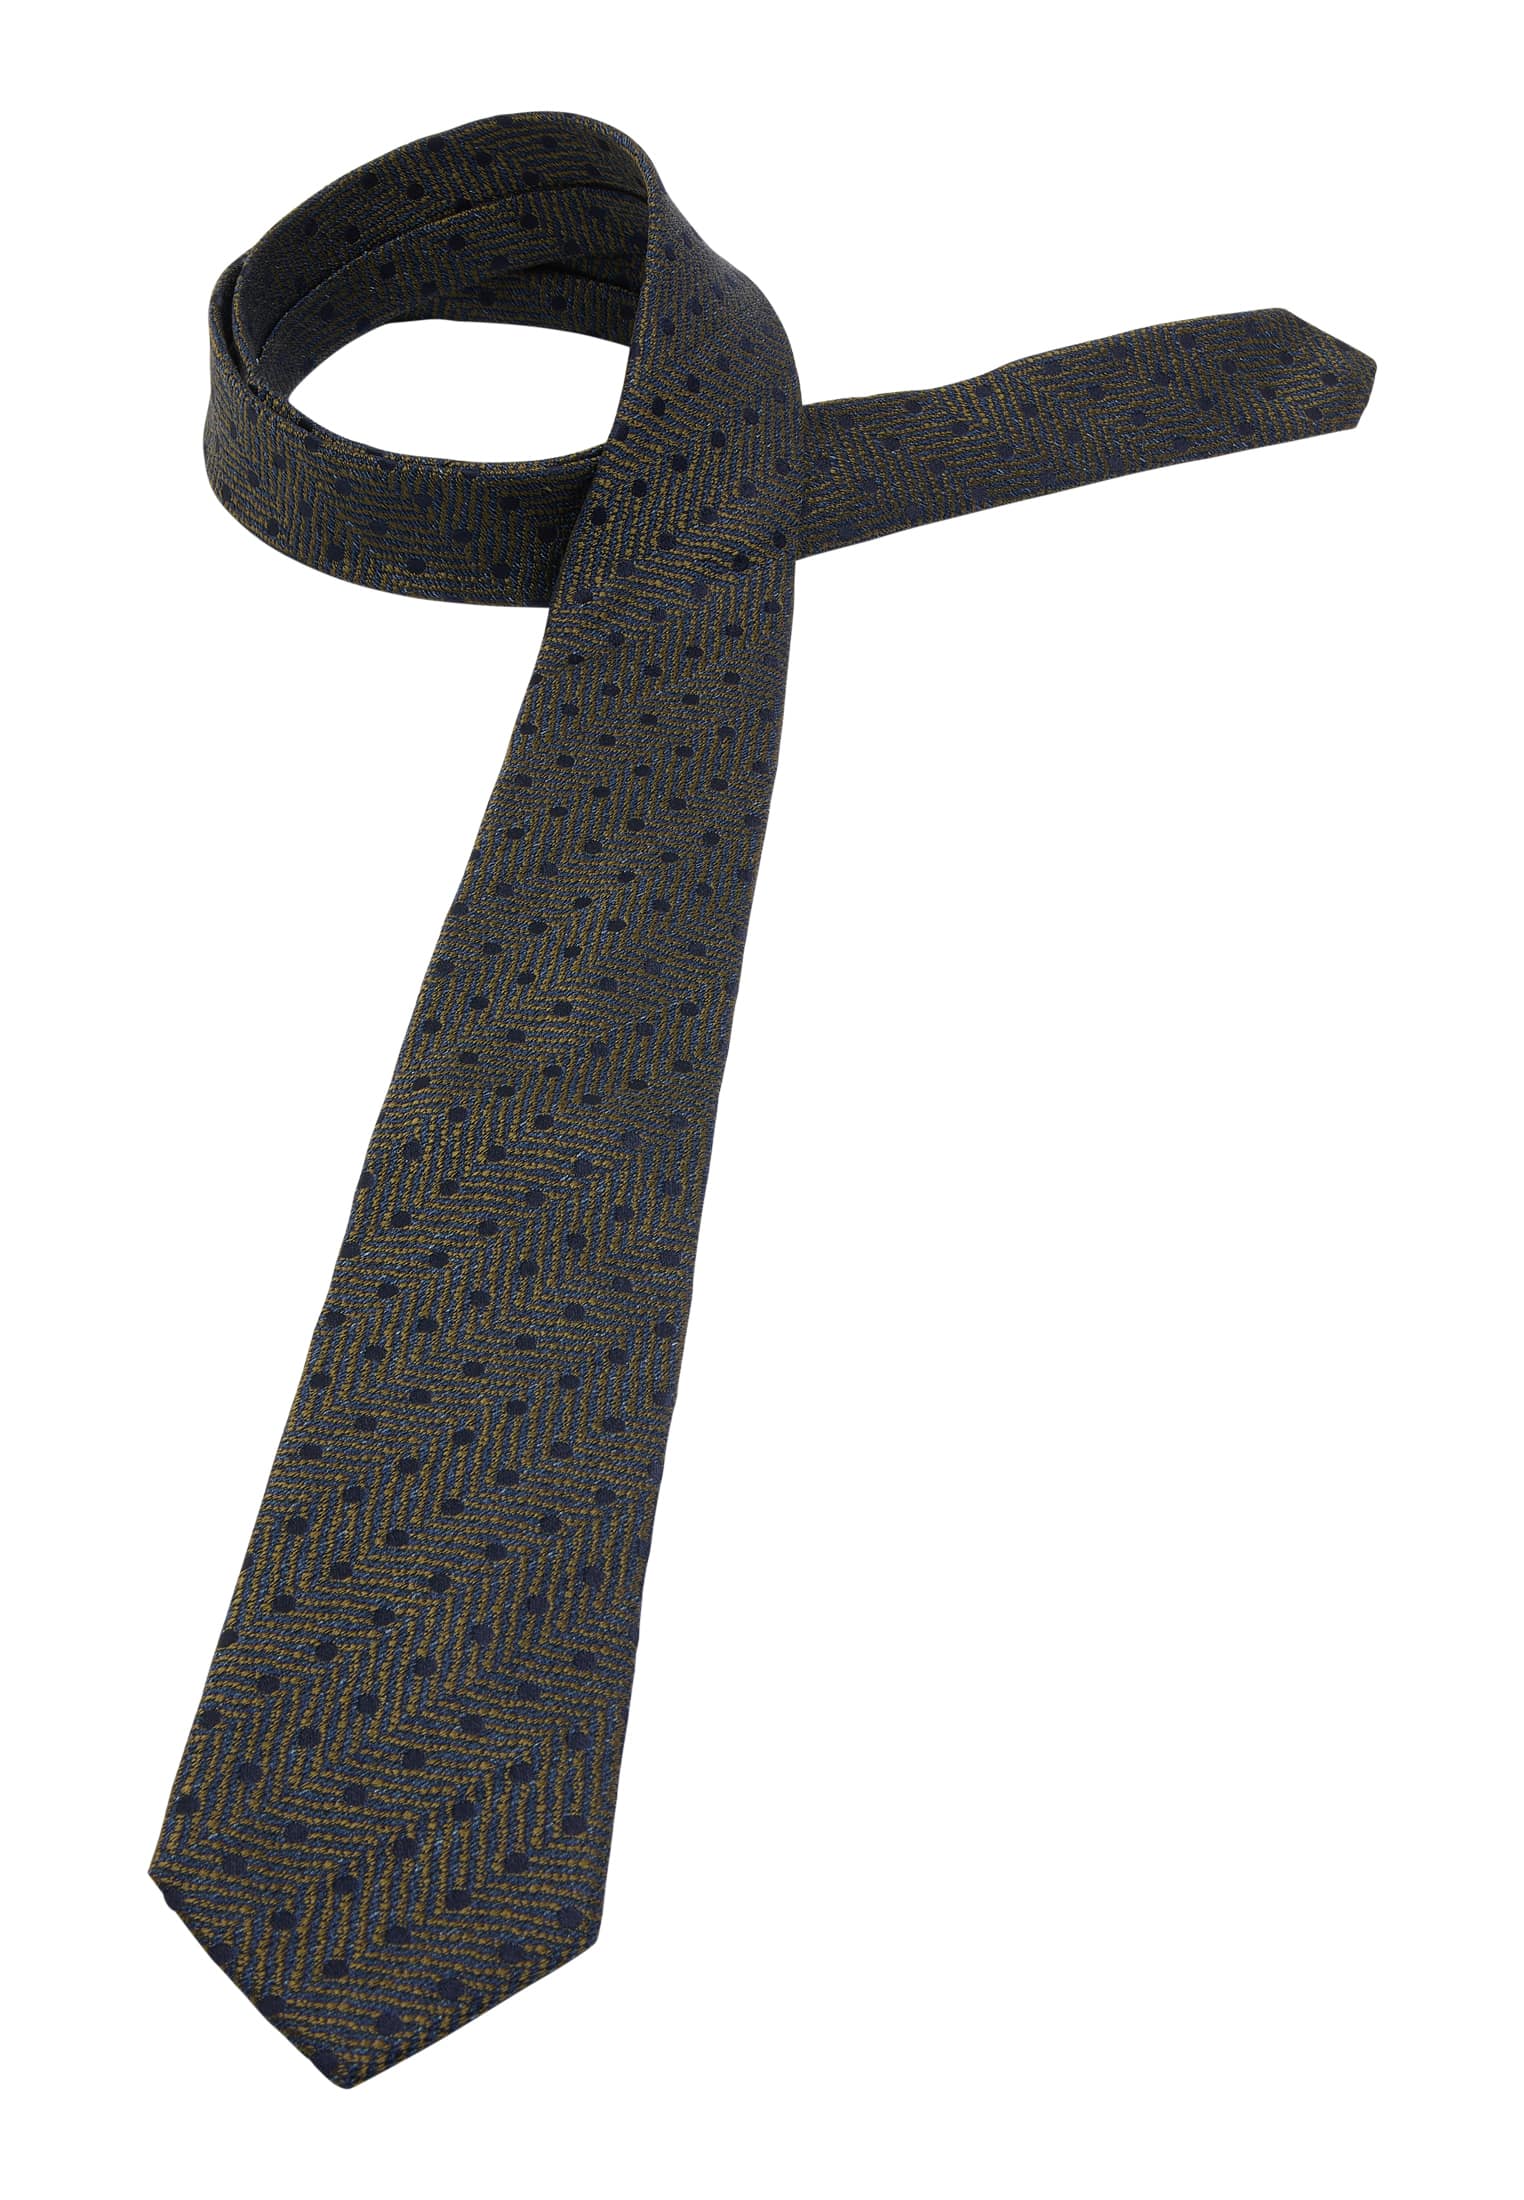 Krawatte in khaki strukturiert | | | 1AC01933-04-52-142 khaki 142